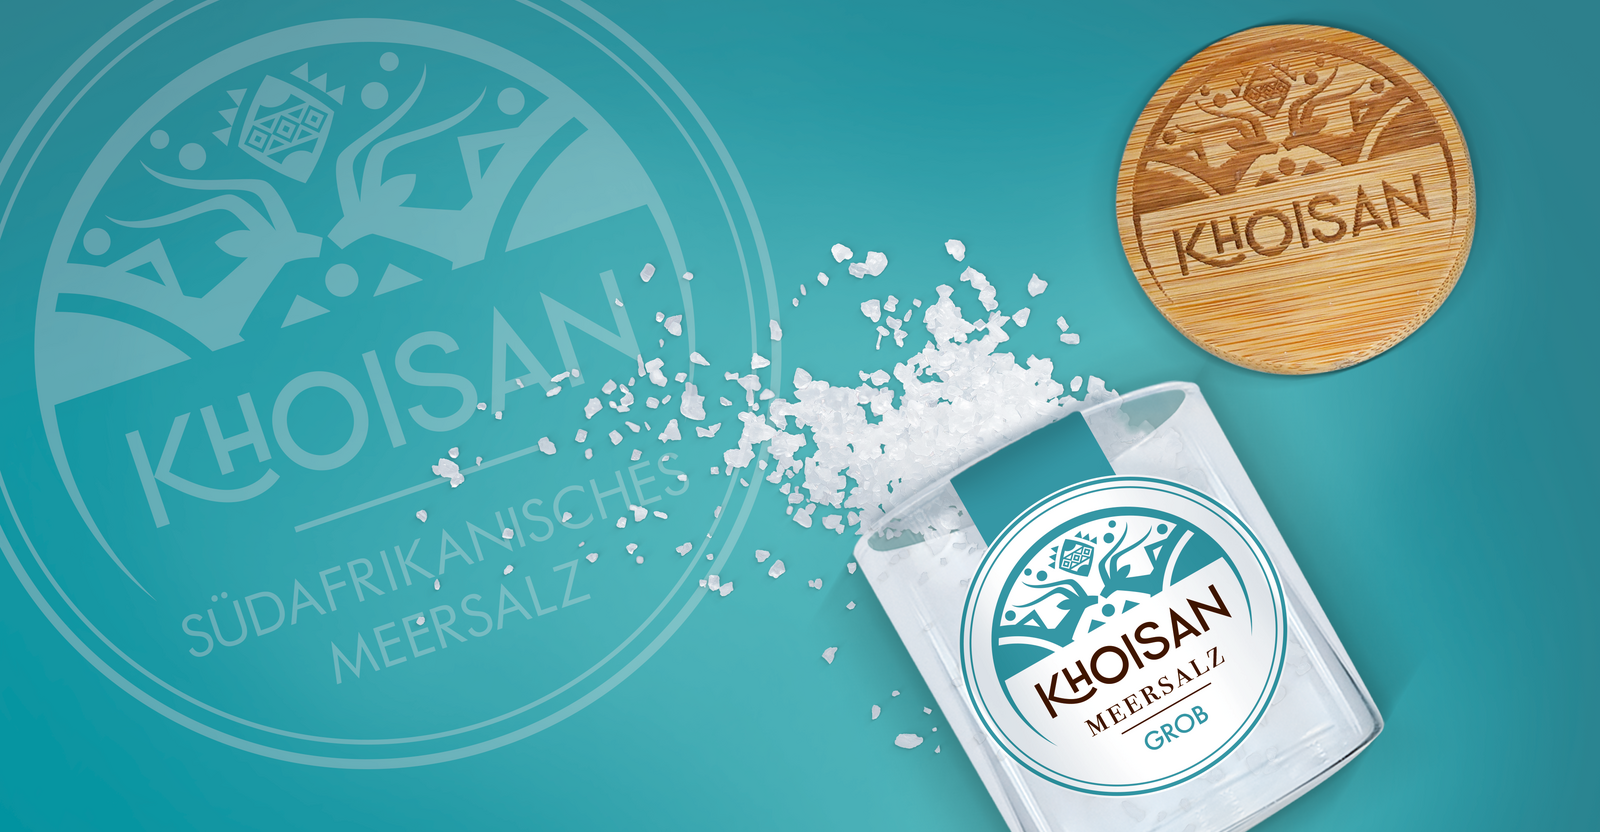 Khoisan Sea Salt Relaunch Graphic Design Naming Branding Strategy Packaging Design Corporate Design Packaging Concept Sustainable Packaging POS Material Claiming